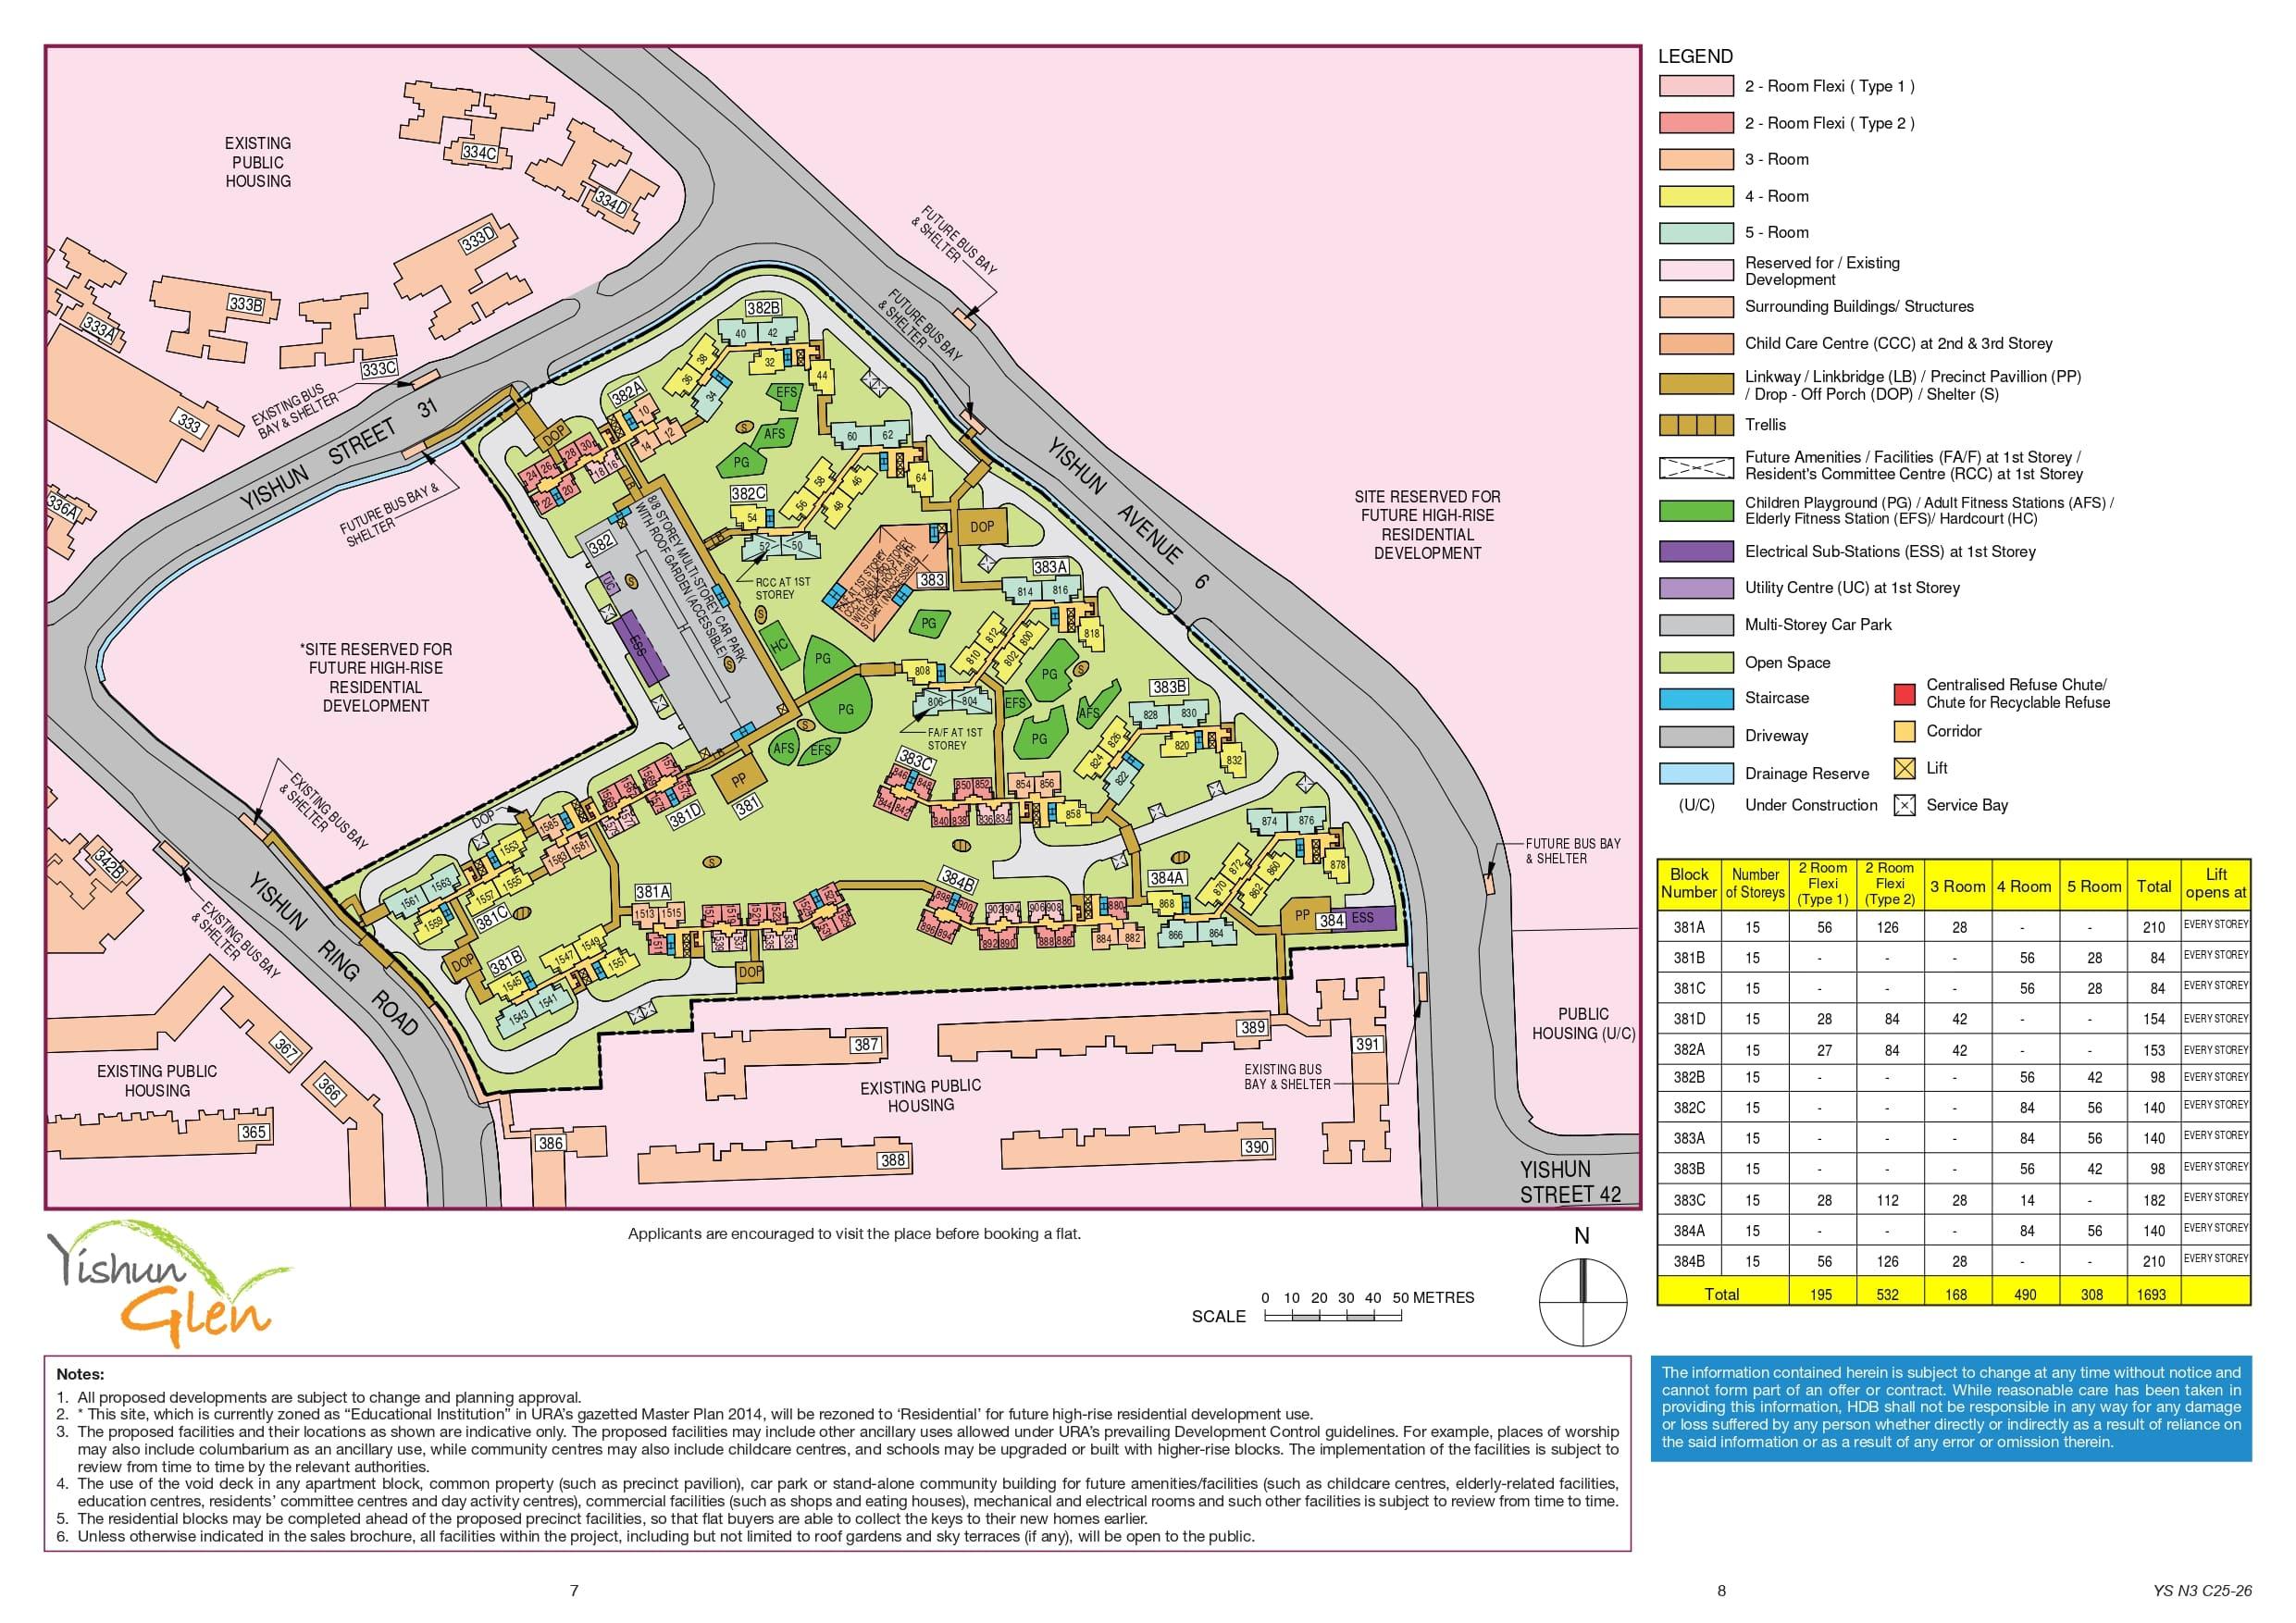 Yishun Glen site-plan